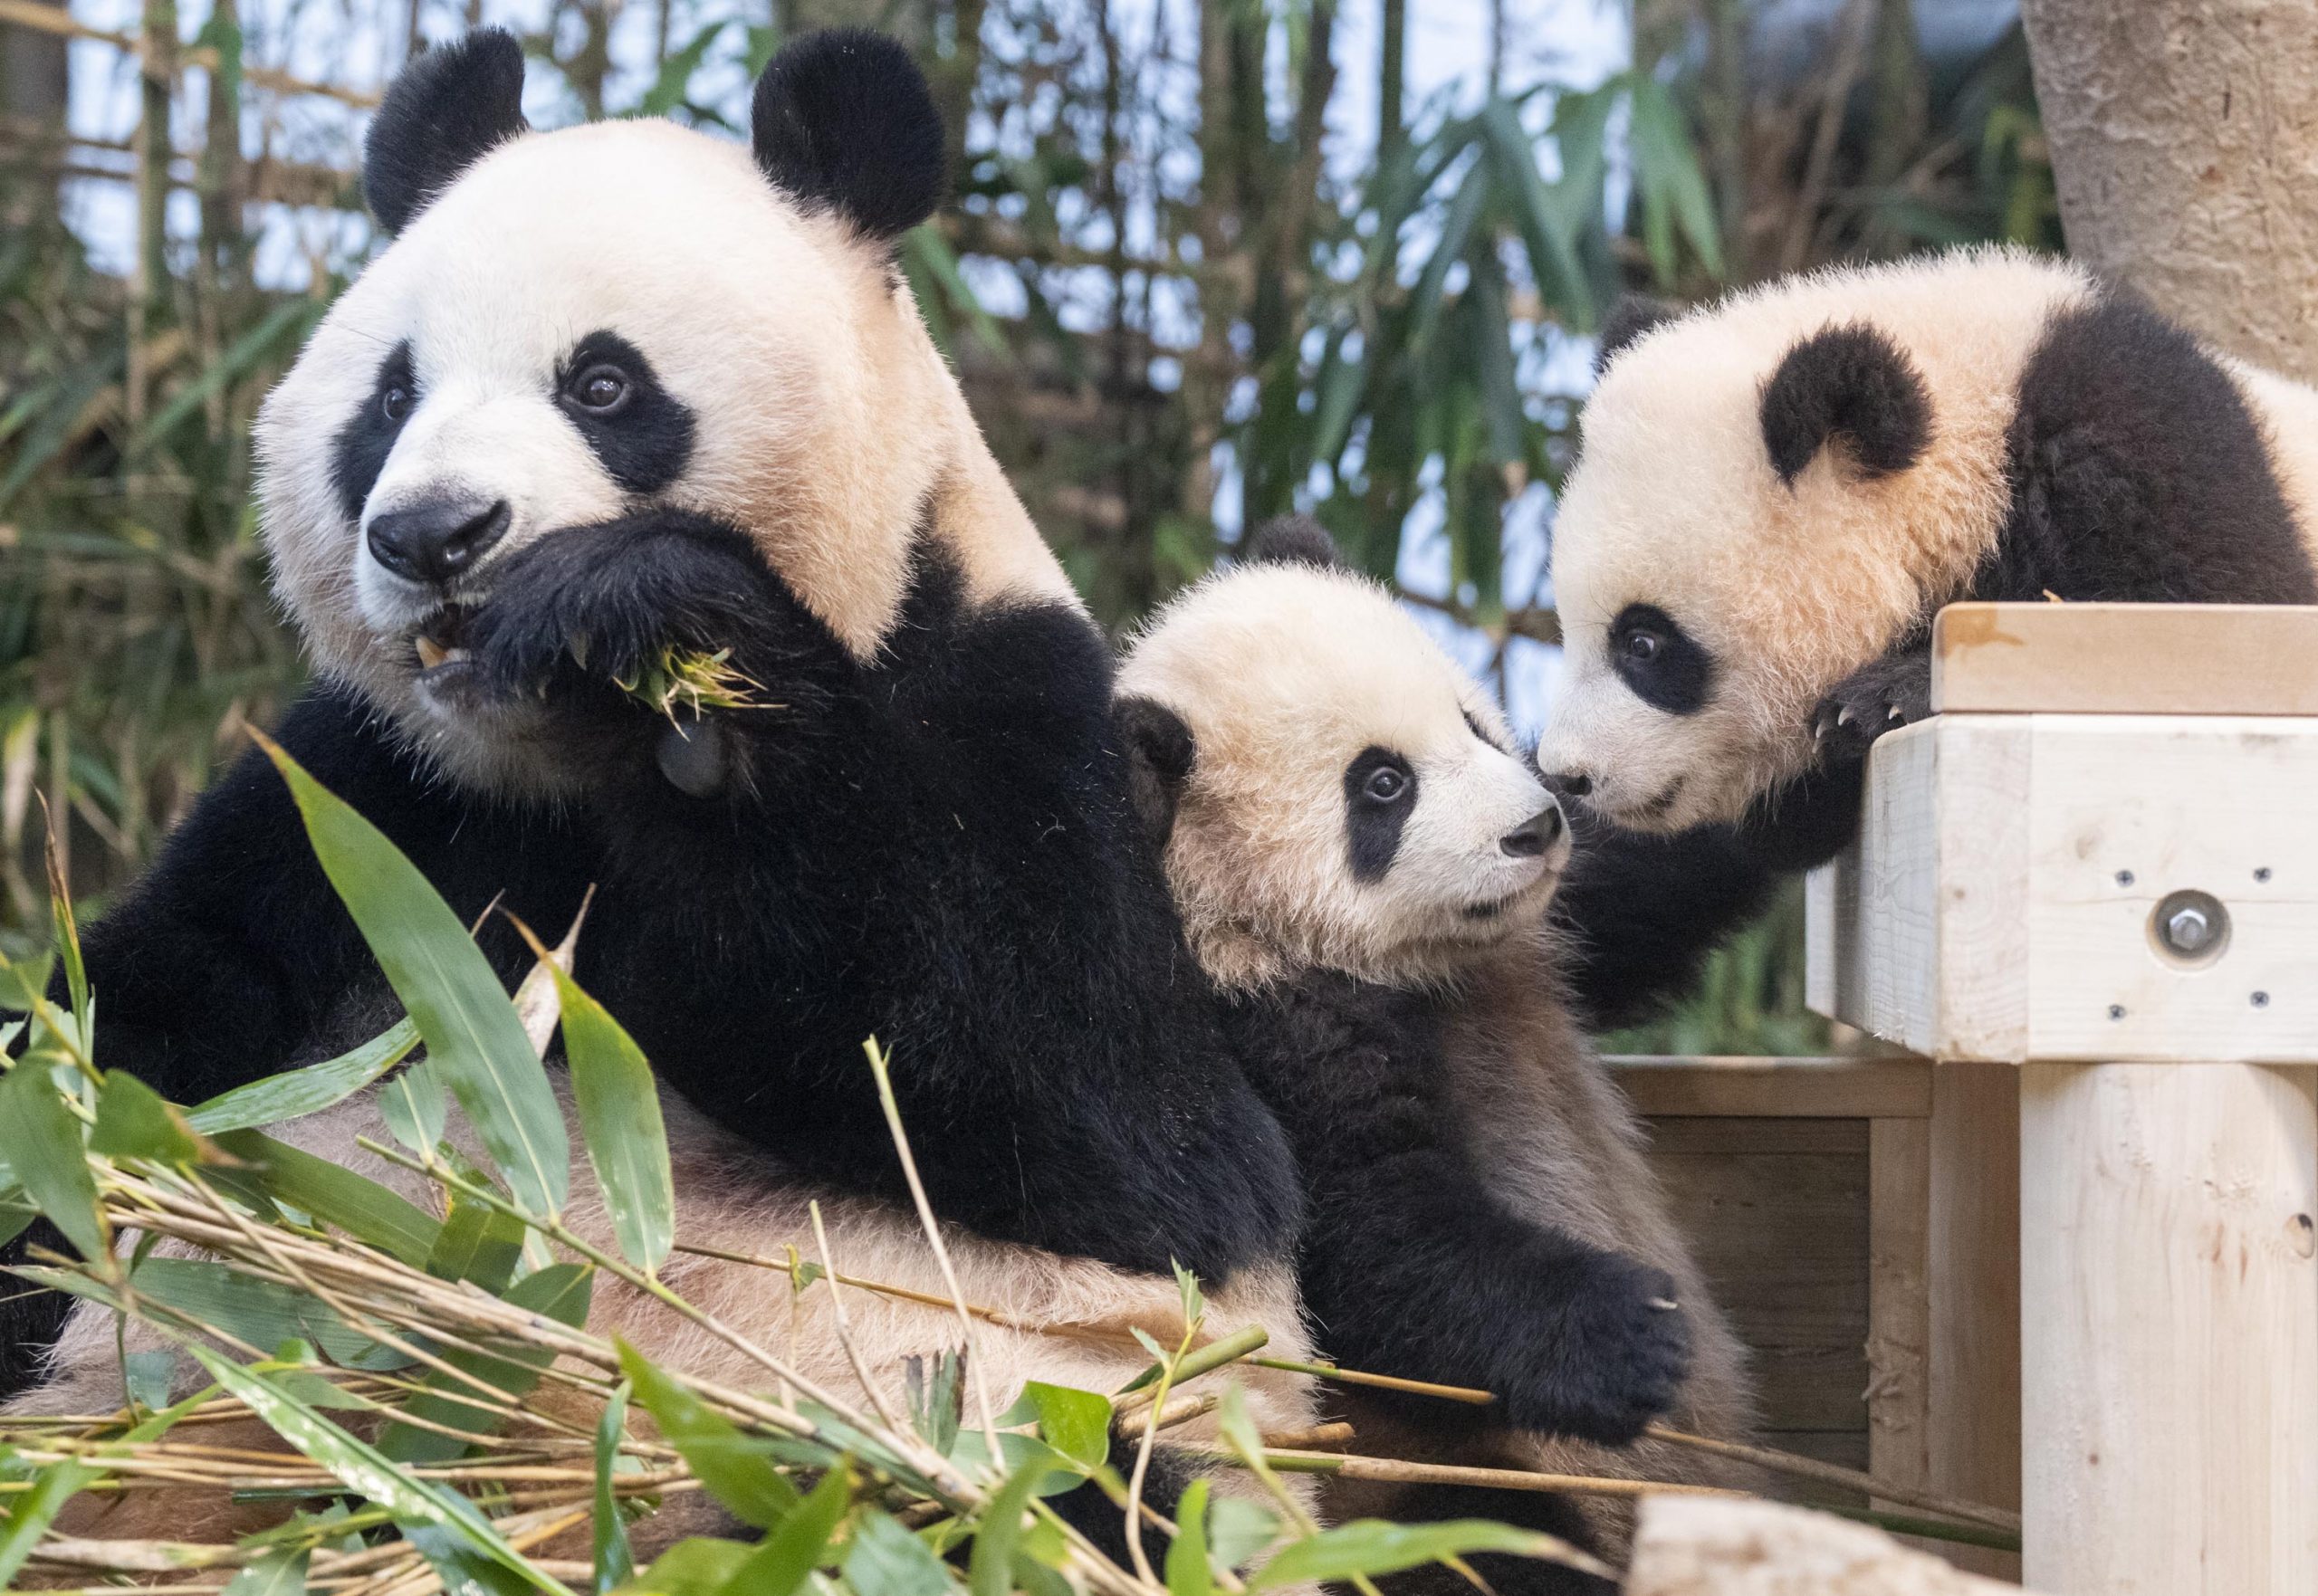 On Jan. 10, Ai Bao eats her bamboo while Lui Bao and Hui Bao seem to conspire behind her.